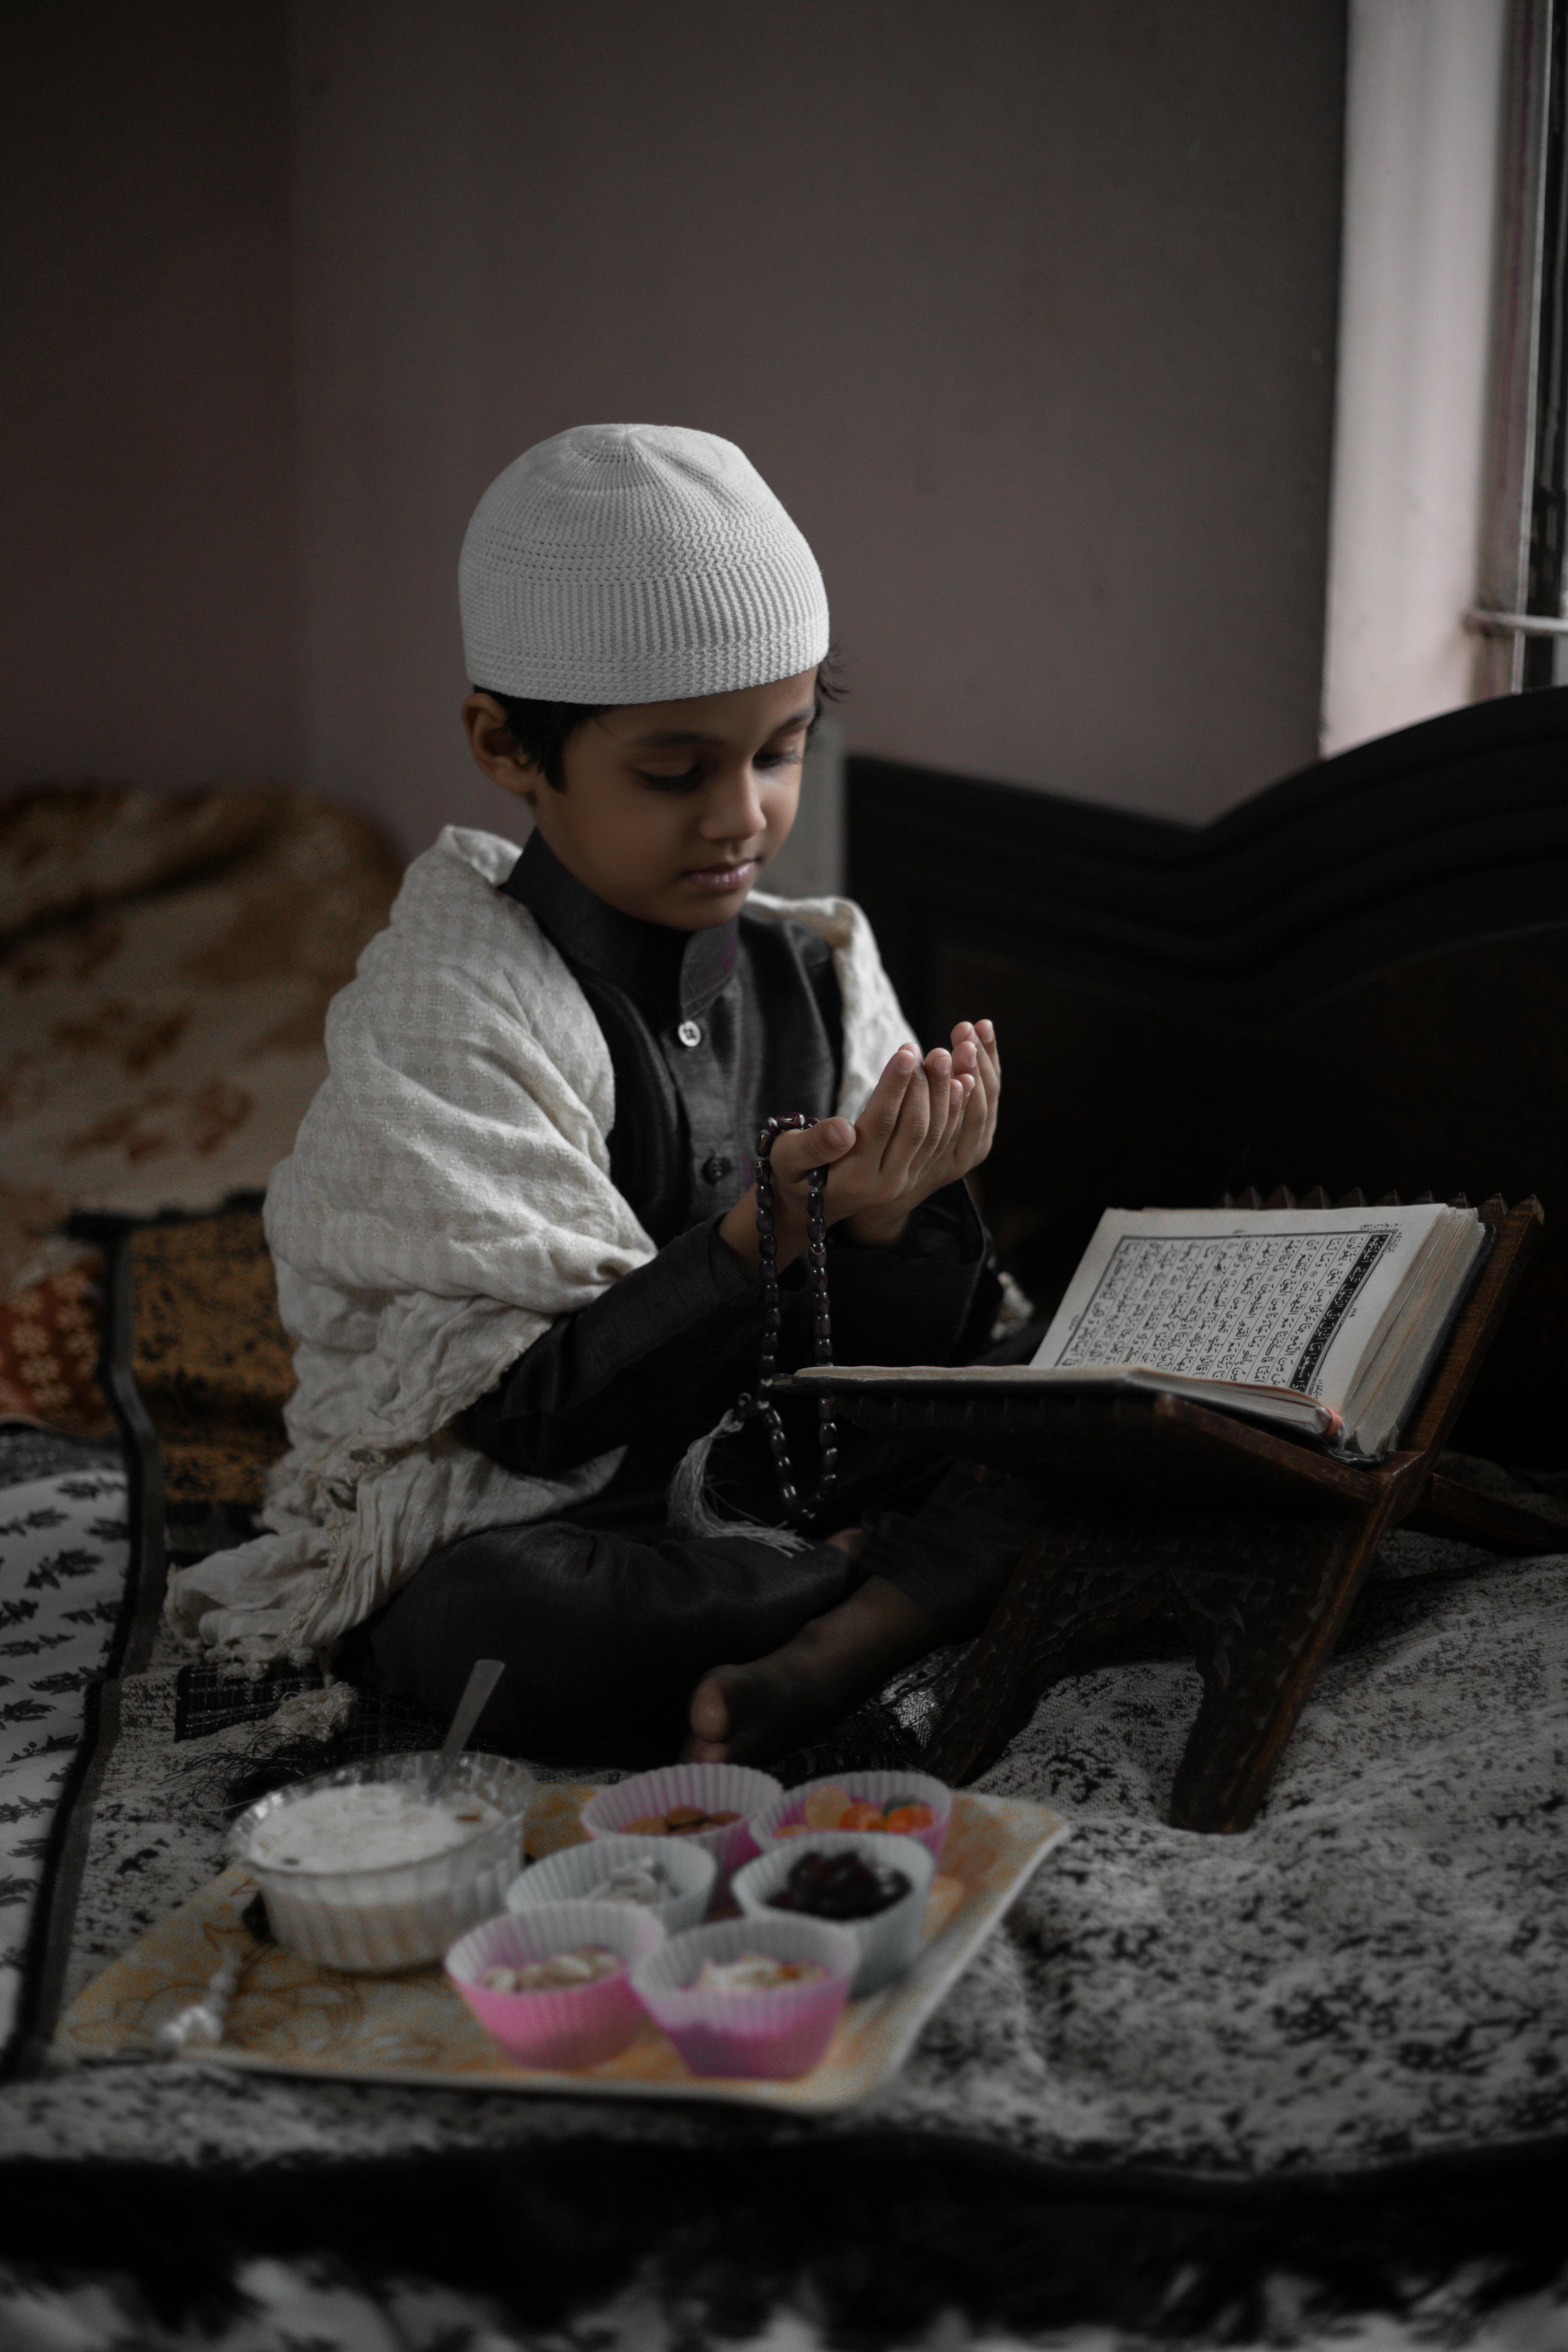 muslim baby boy with quran